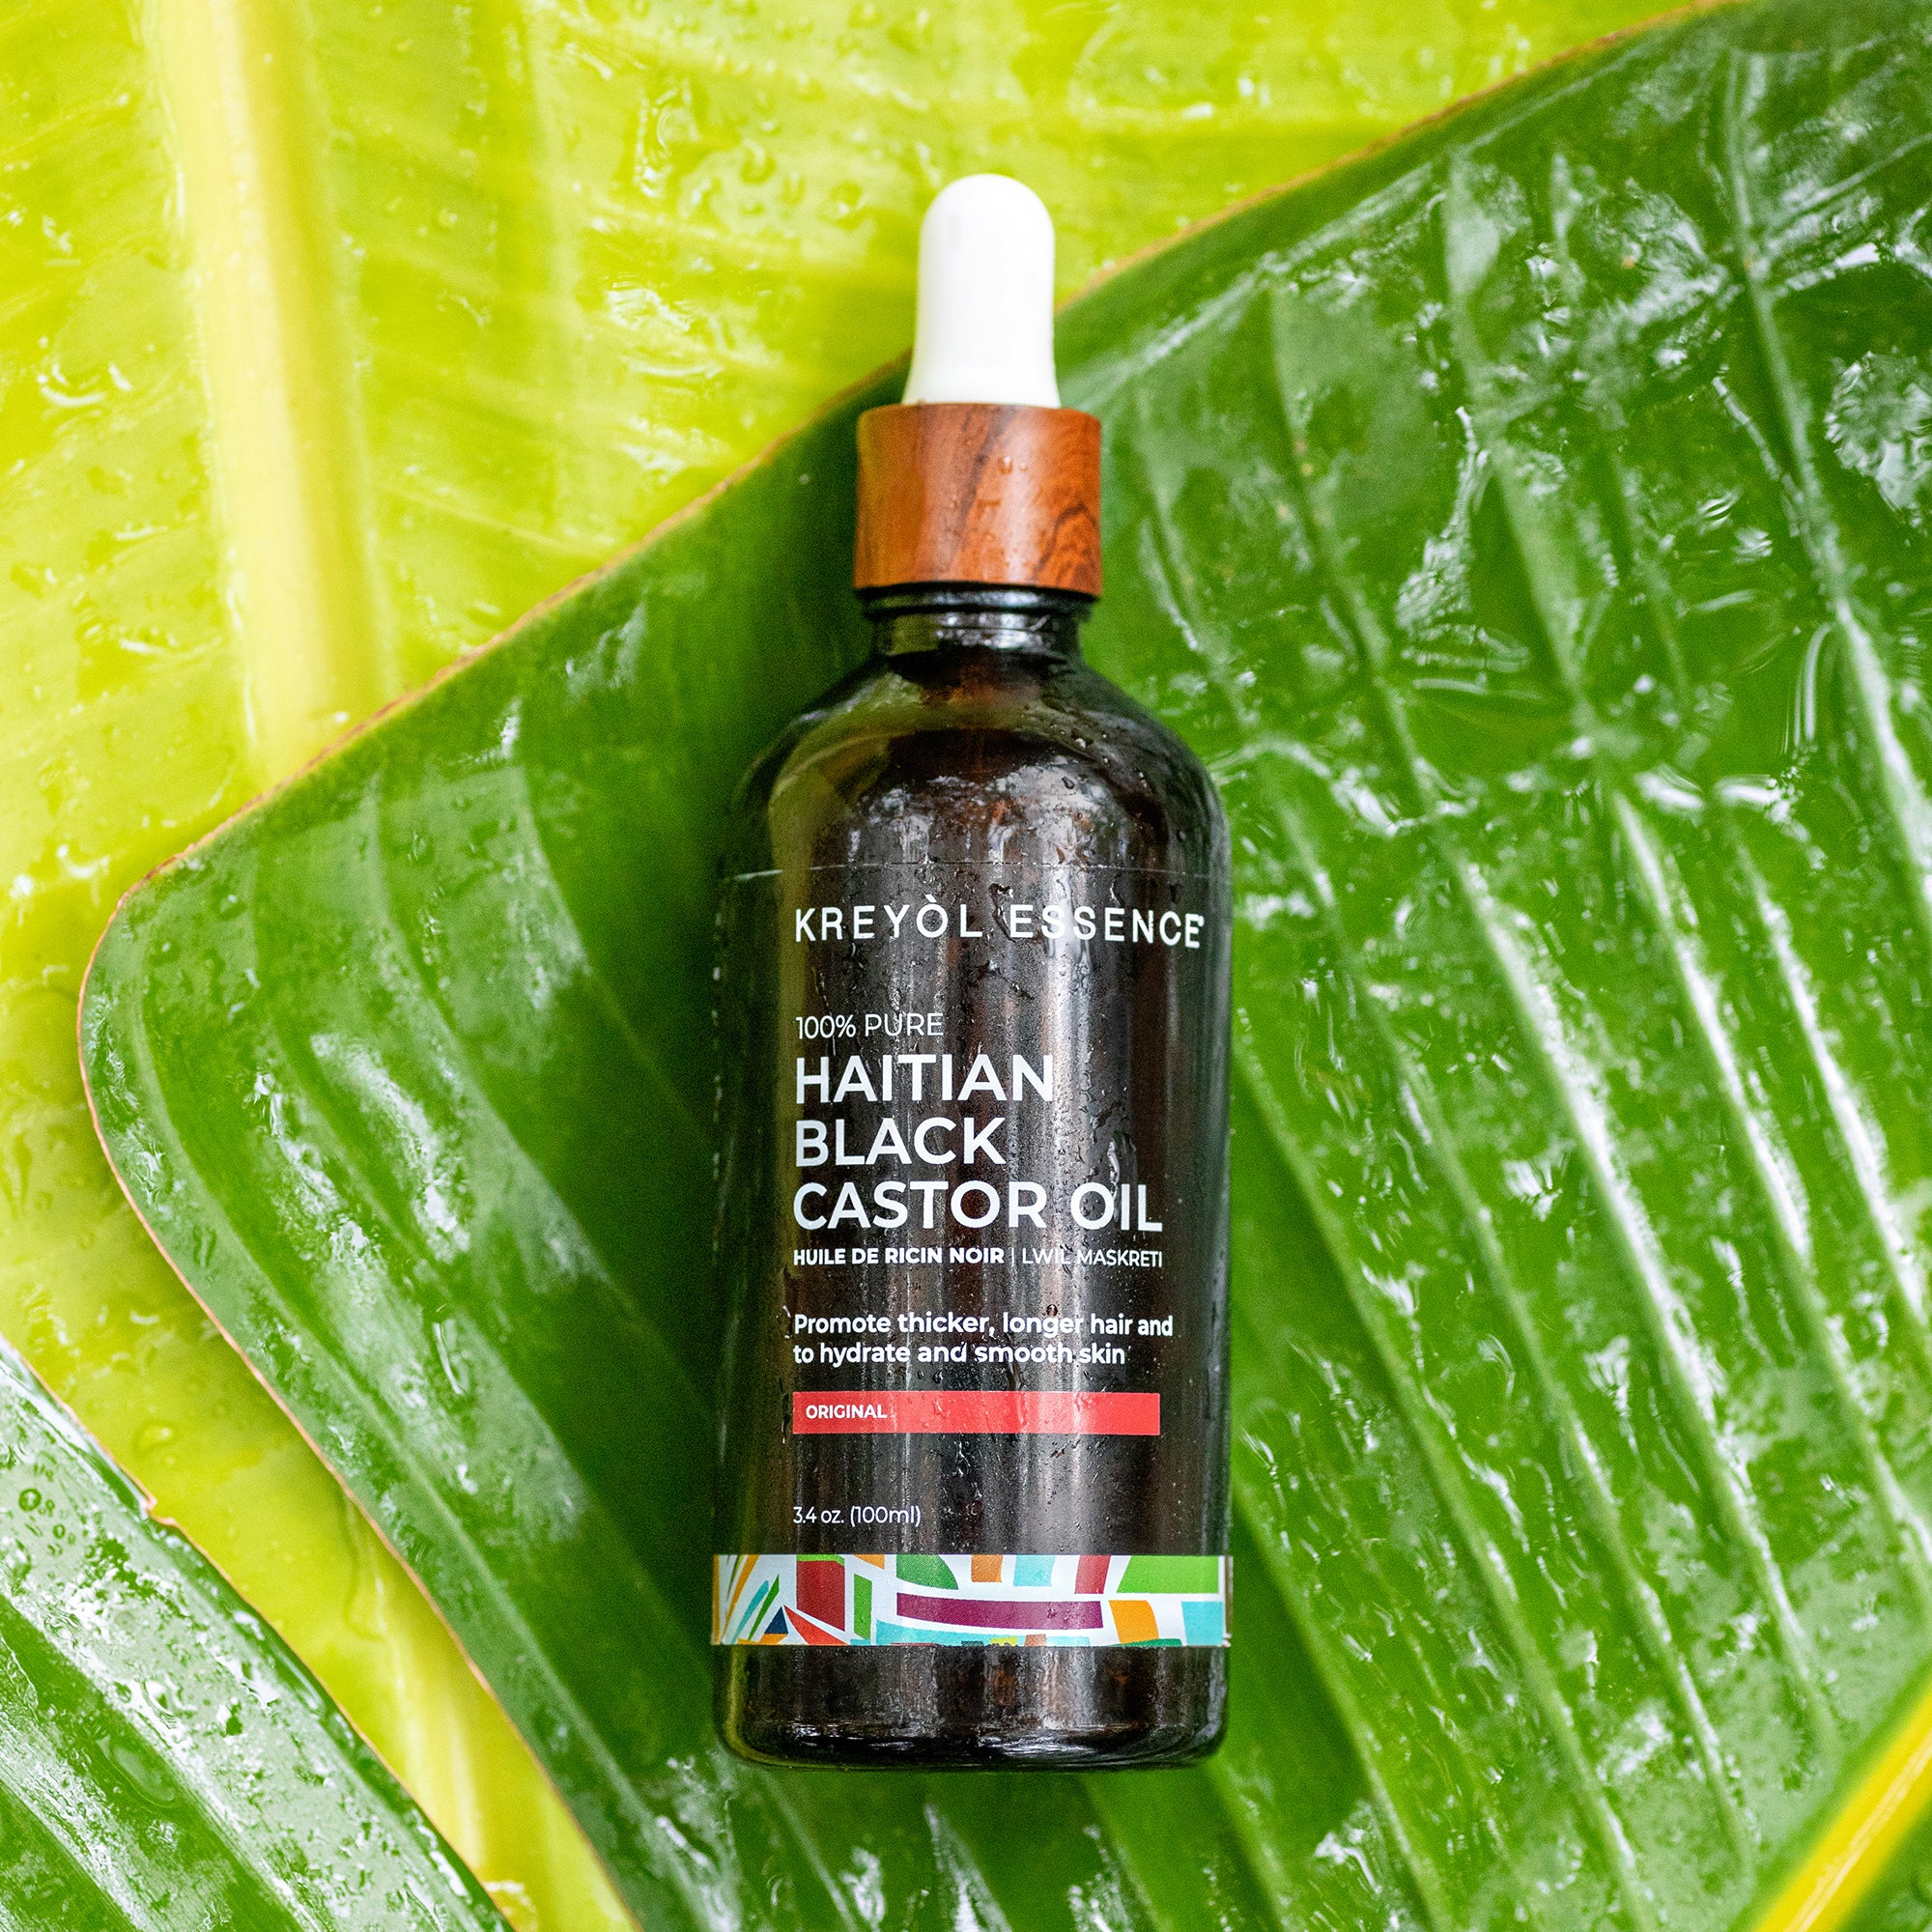 Haitian Black Castor Oil: Original (3.4oz) Super Size - Kreyol Essence